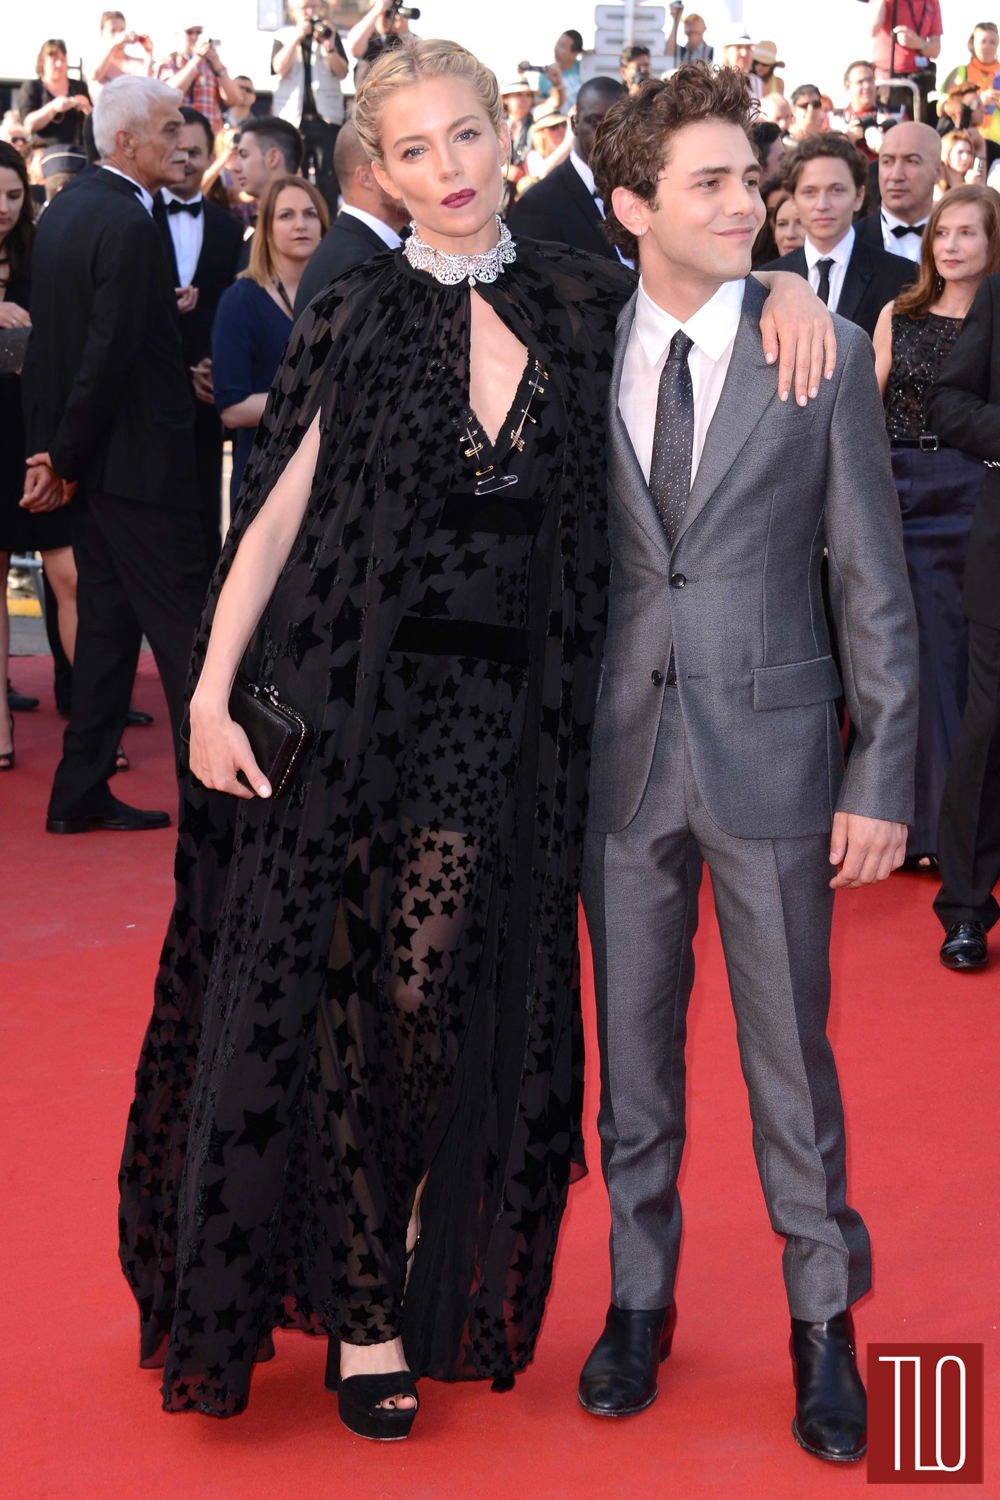 Sienna-Miller-2015-Cannes-Film-Festival-Red-Carpet-Fashion-Sonia-Rykiel-Bulgari-Tom-Lorenzo-Site-TLO (1)